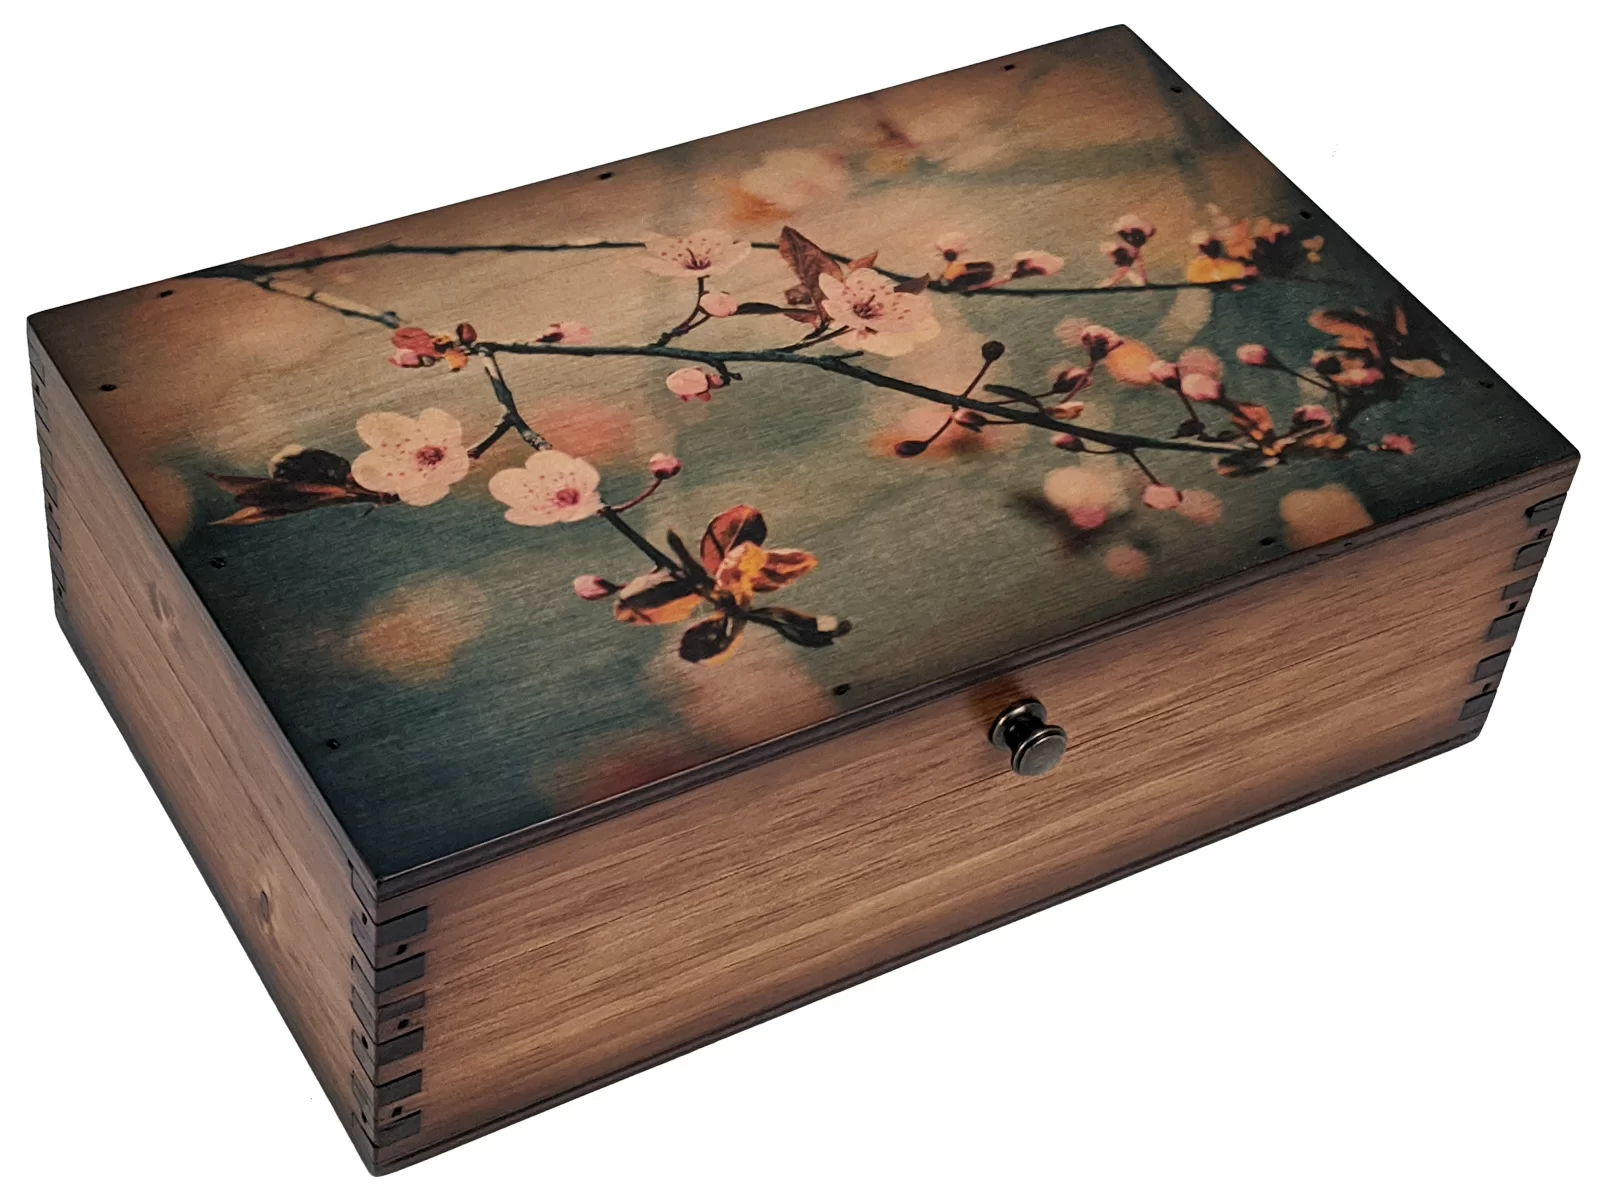 Wood Box With Lid Wood Box Cherry Wood Box Box With Lid Wooden Box With Lid Decorative Box With Lid Wooden Box